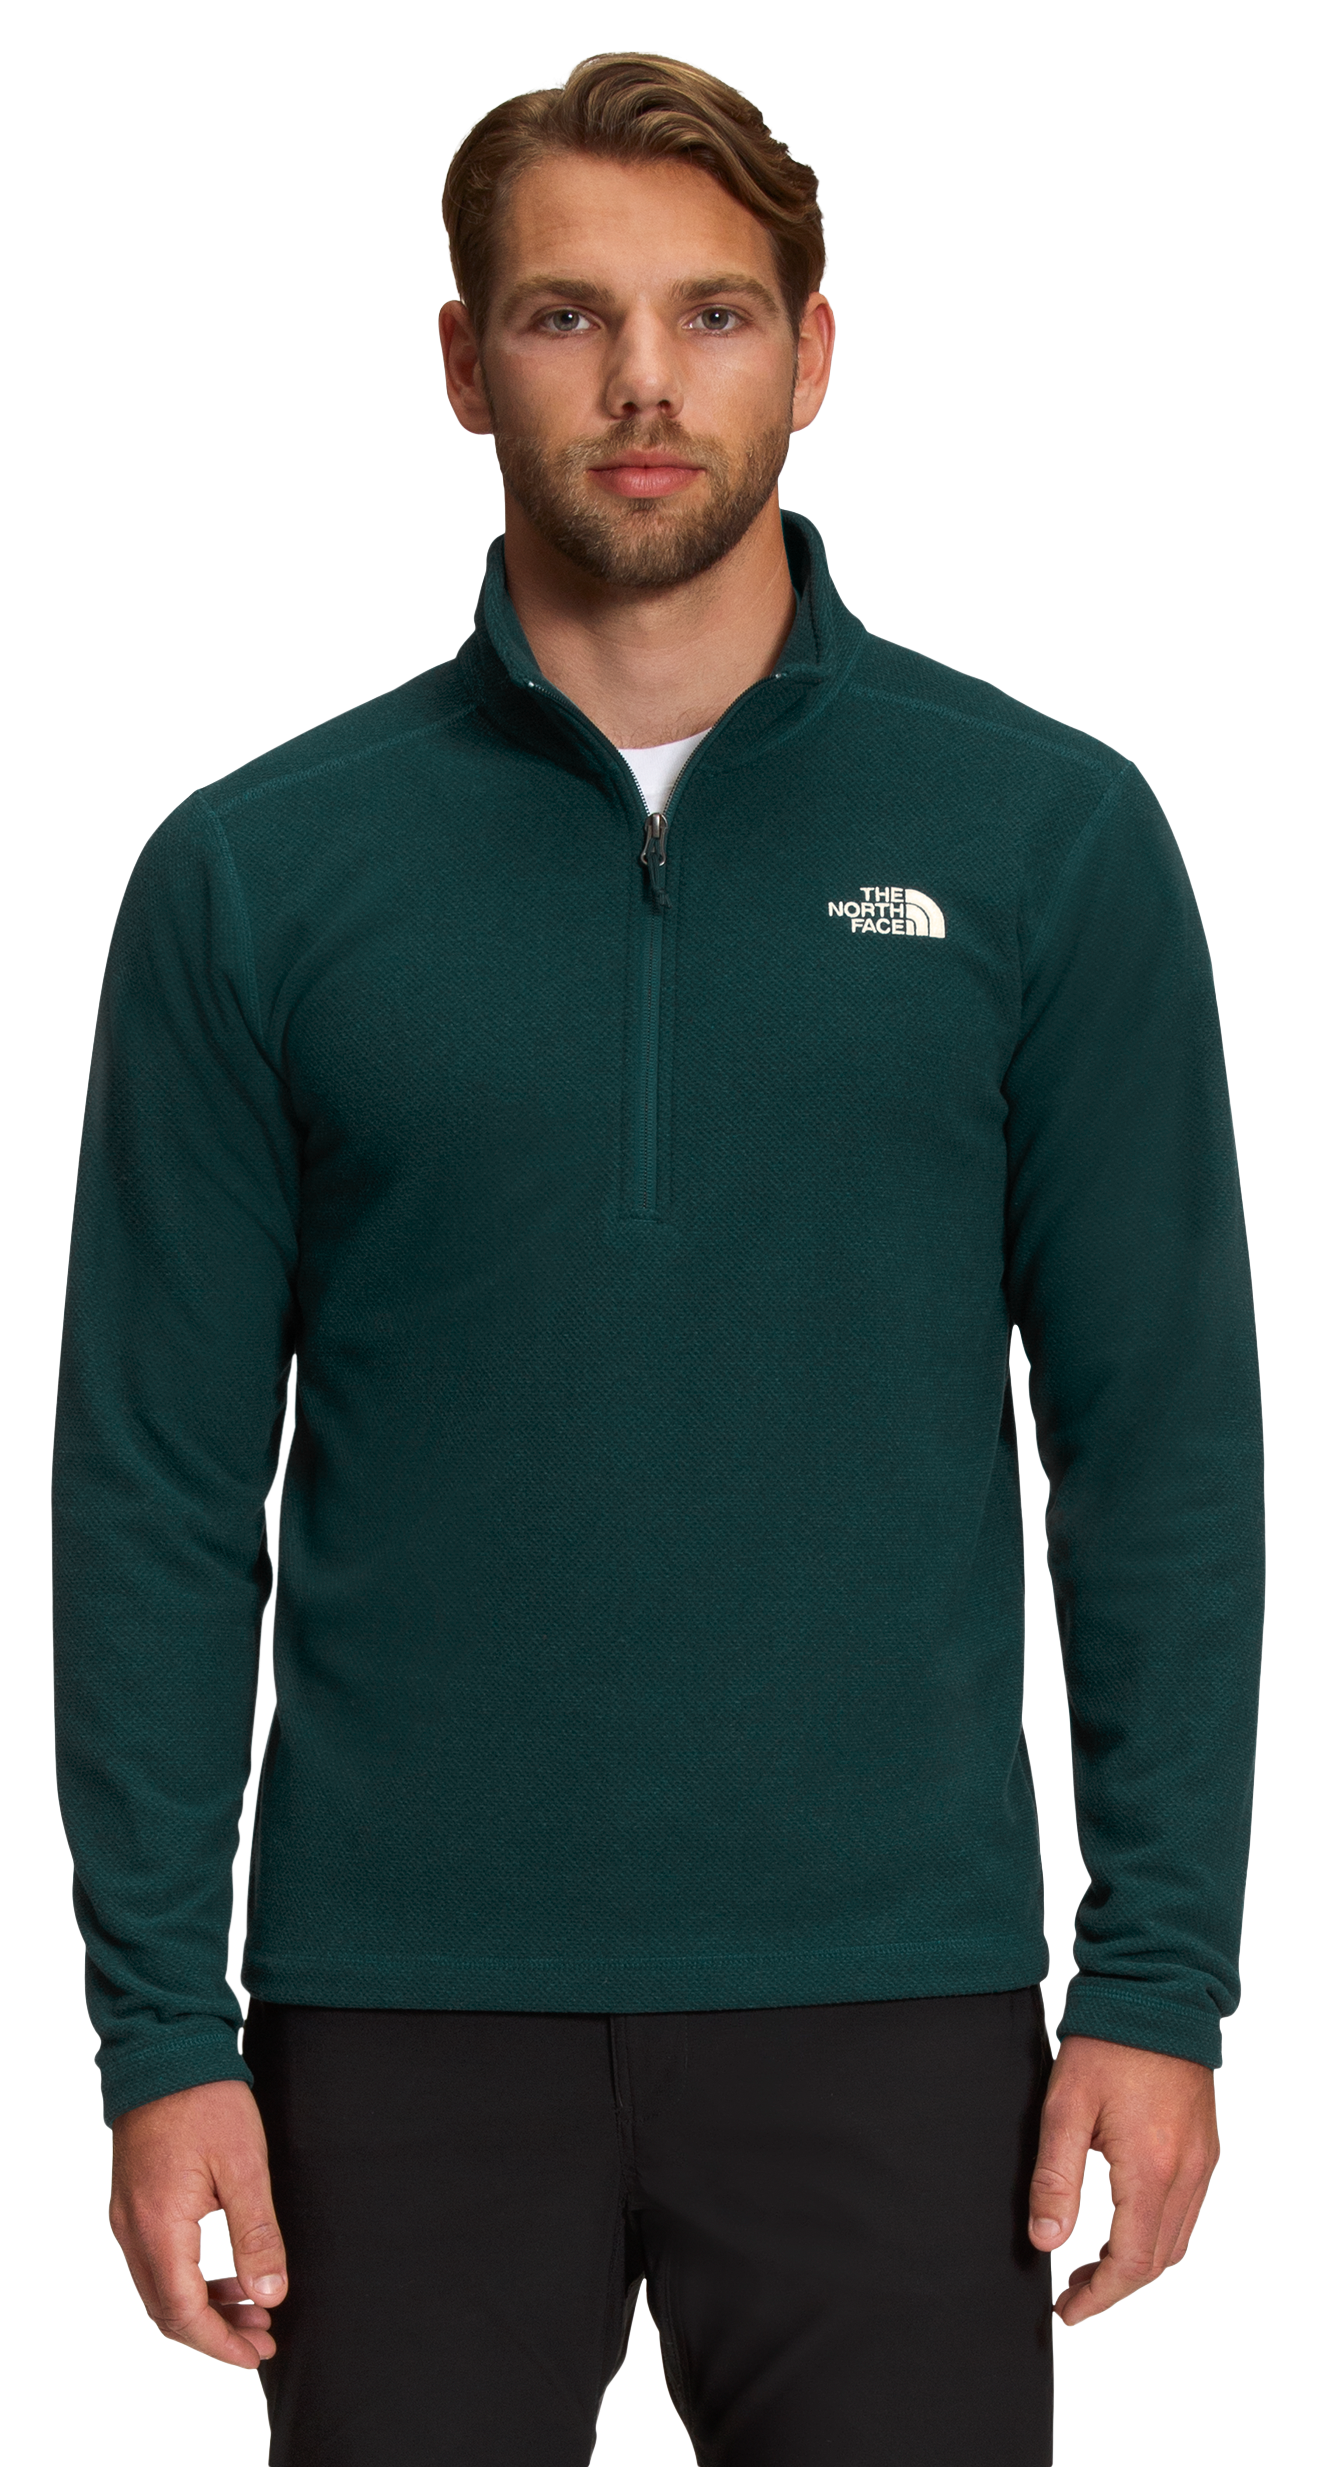 The North Face Textured Cap Rock Quarter-Zip Long-Sleeve Fleece Pullover for Men - Ponderosa Green - S